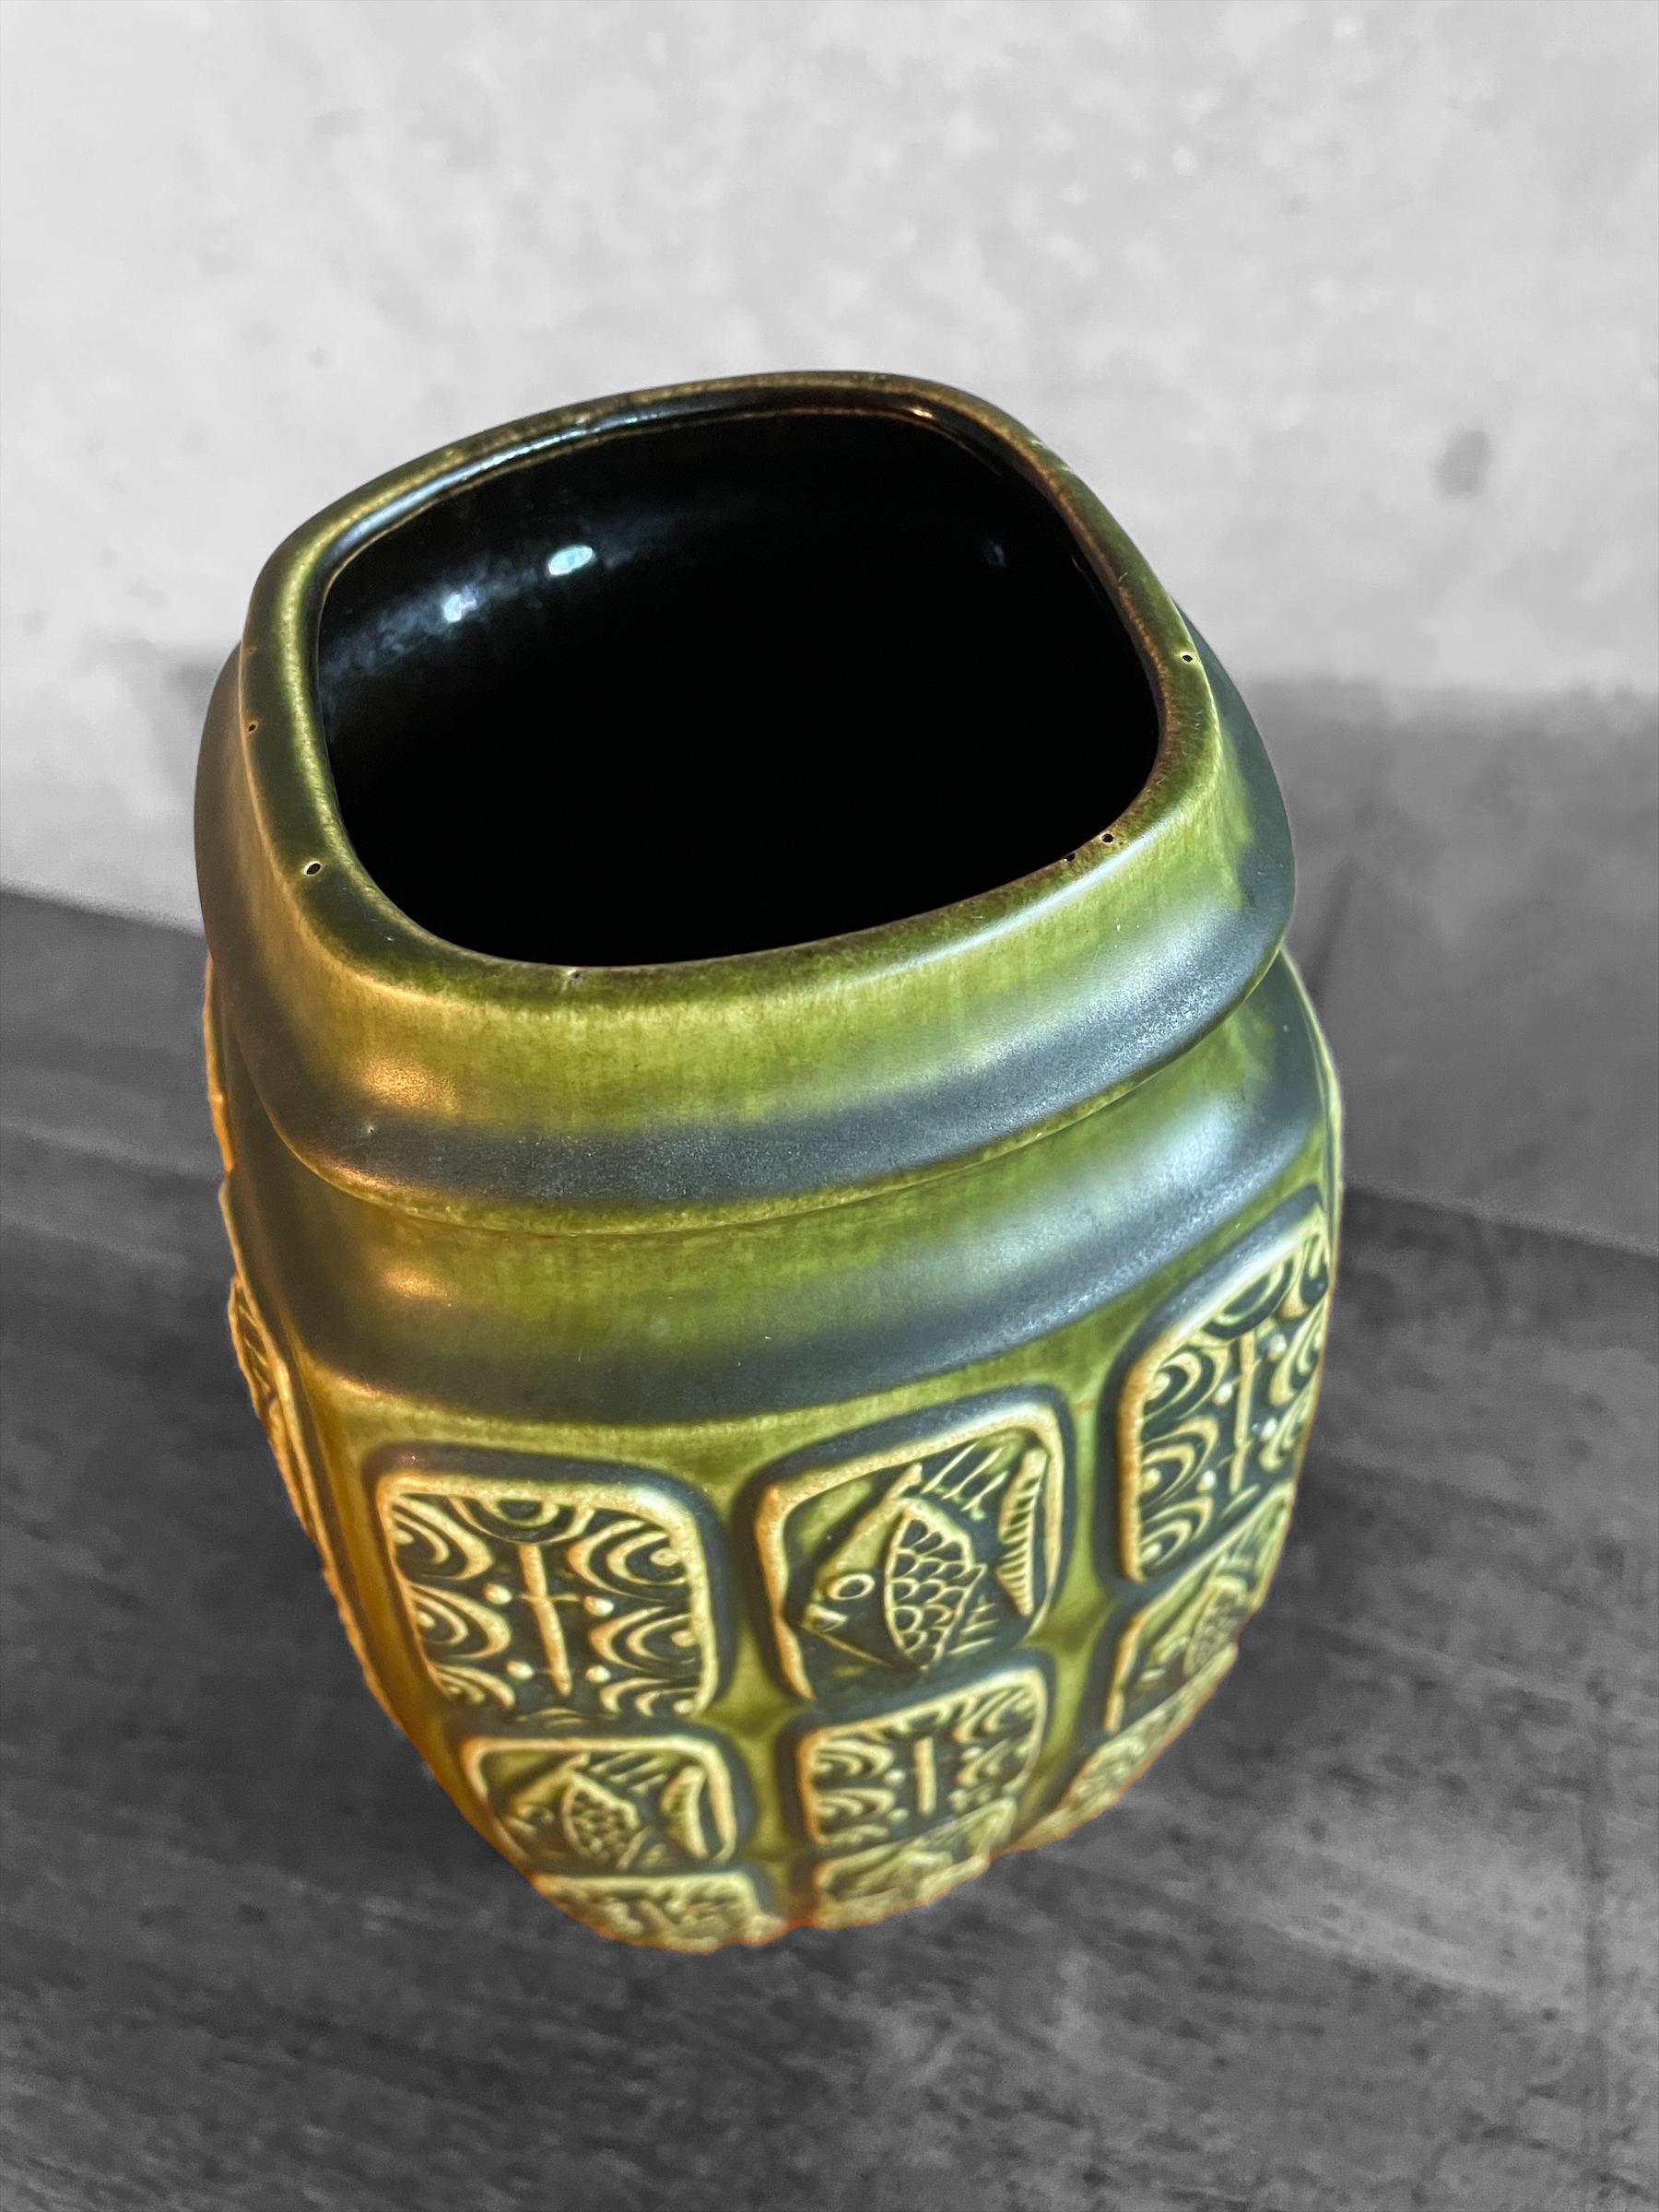 Ceramic vase by BAY Germany (Model 940-30).